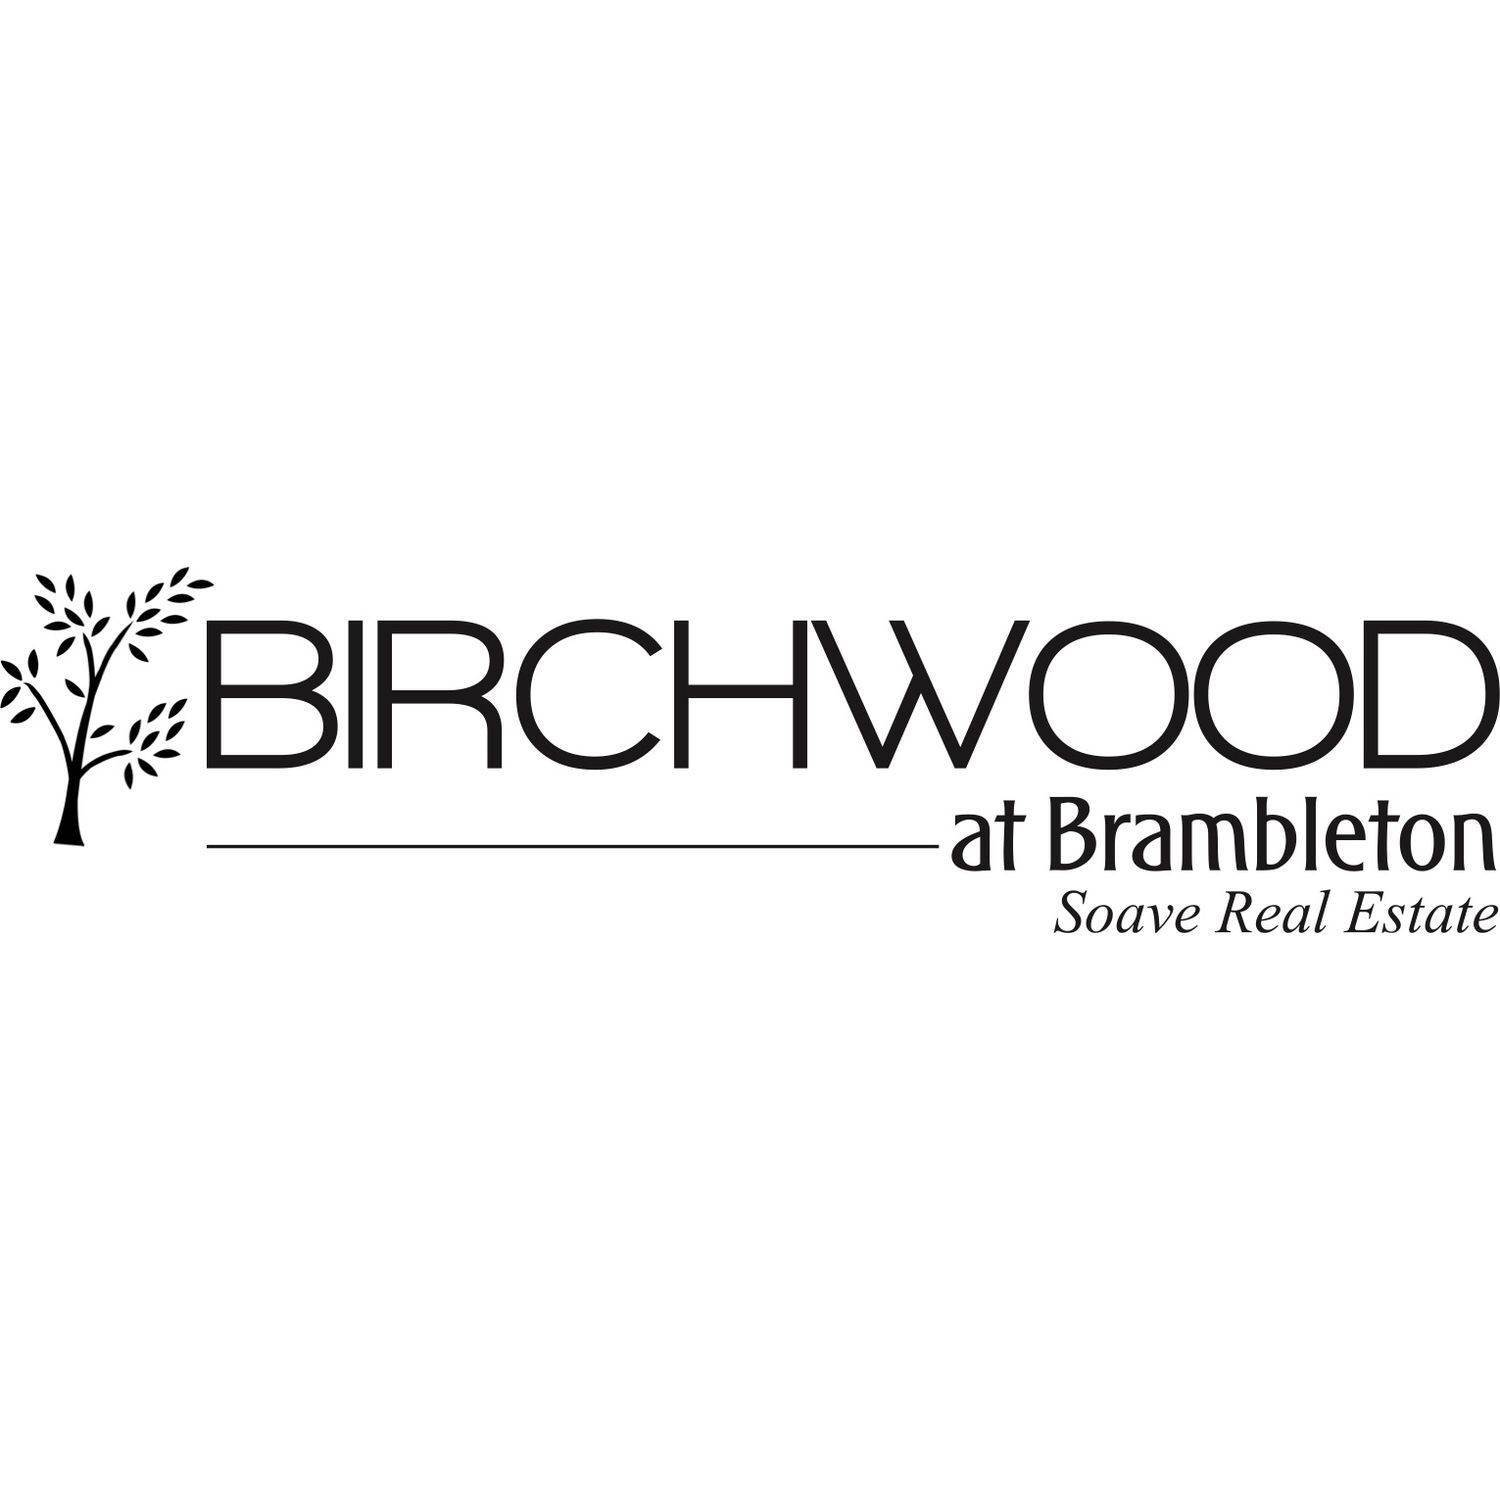 2. Birchwood at Brambleton κτίριο σε 42920 Firefly Sonata Terrace, Ashburn, VA 20148